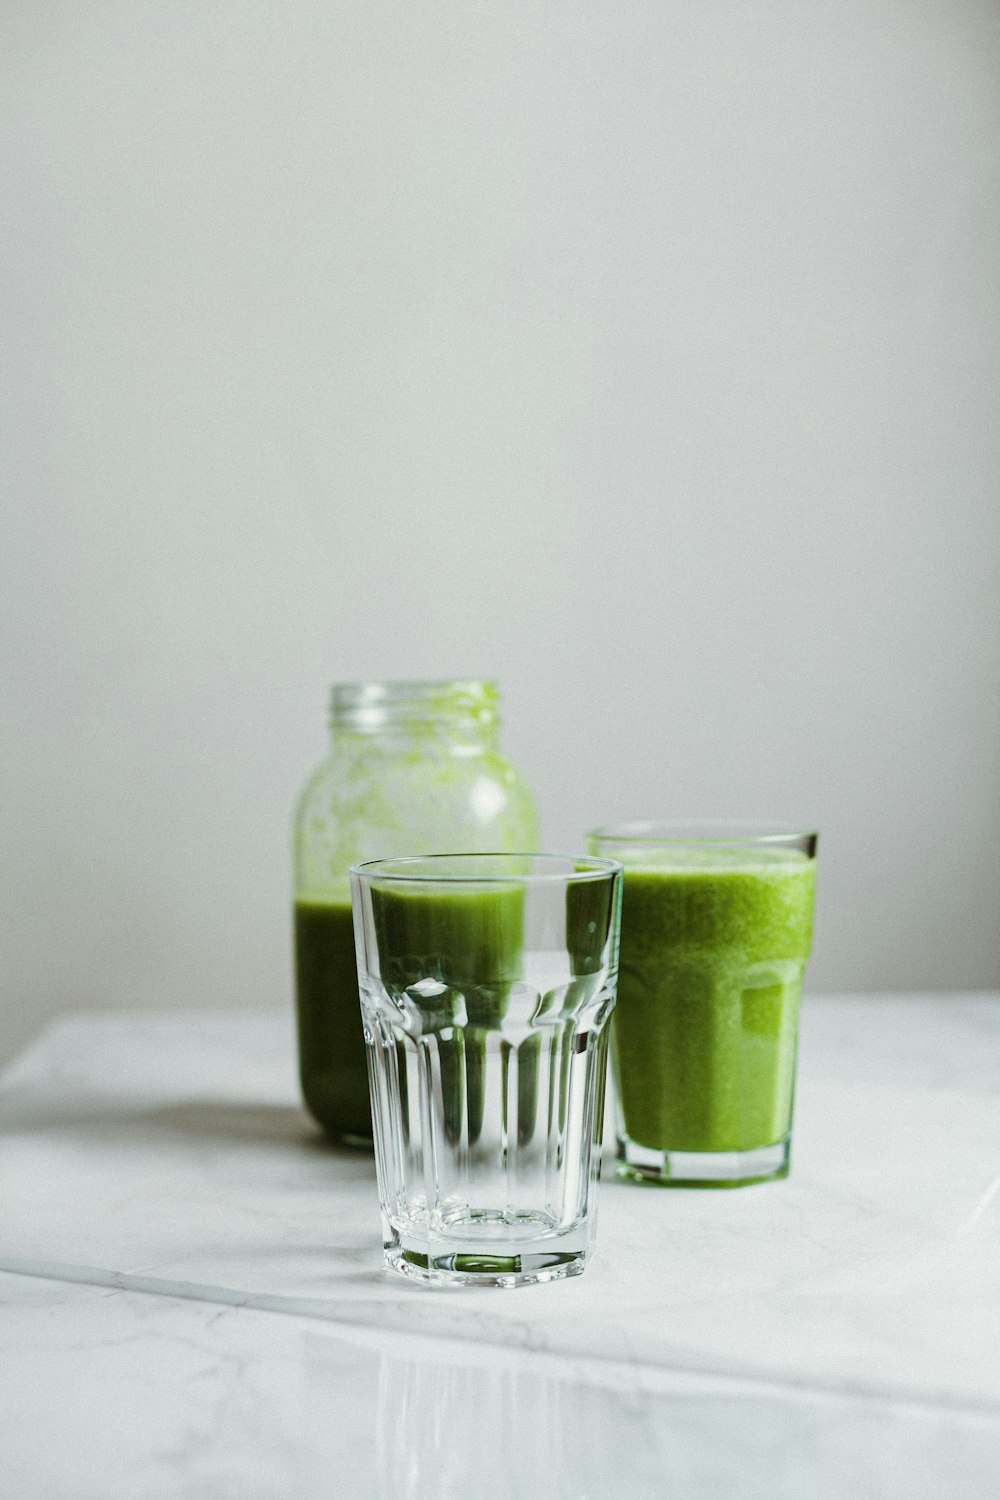 clear glass jar with green liquid